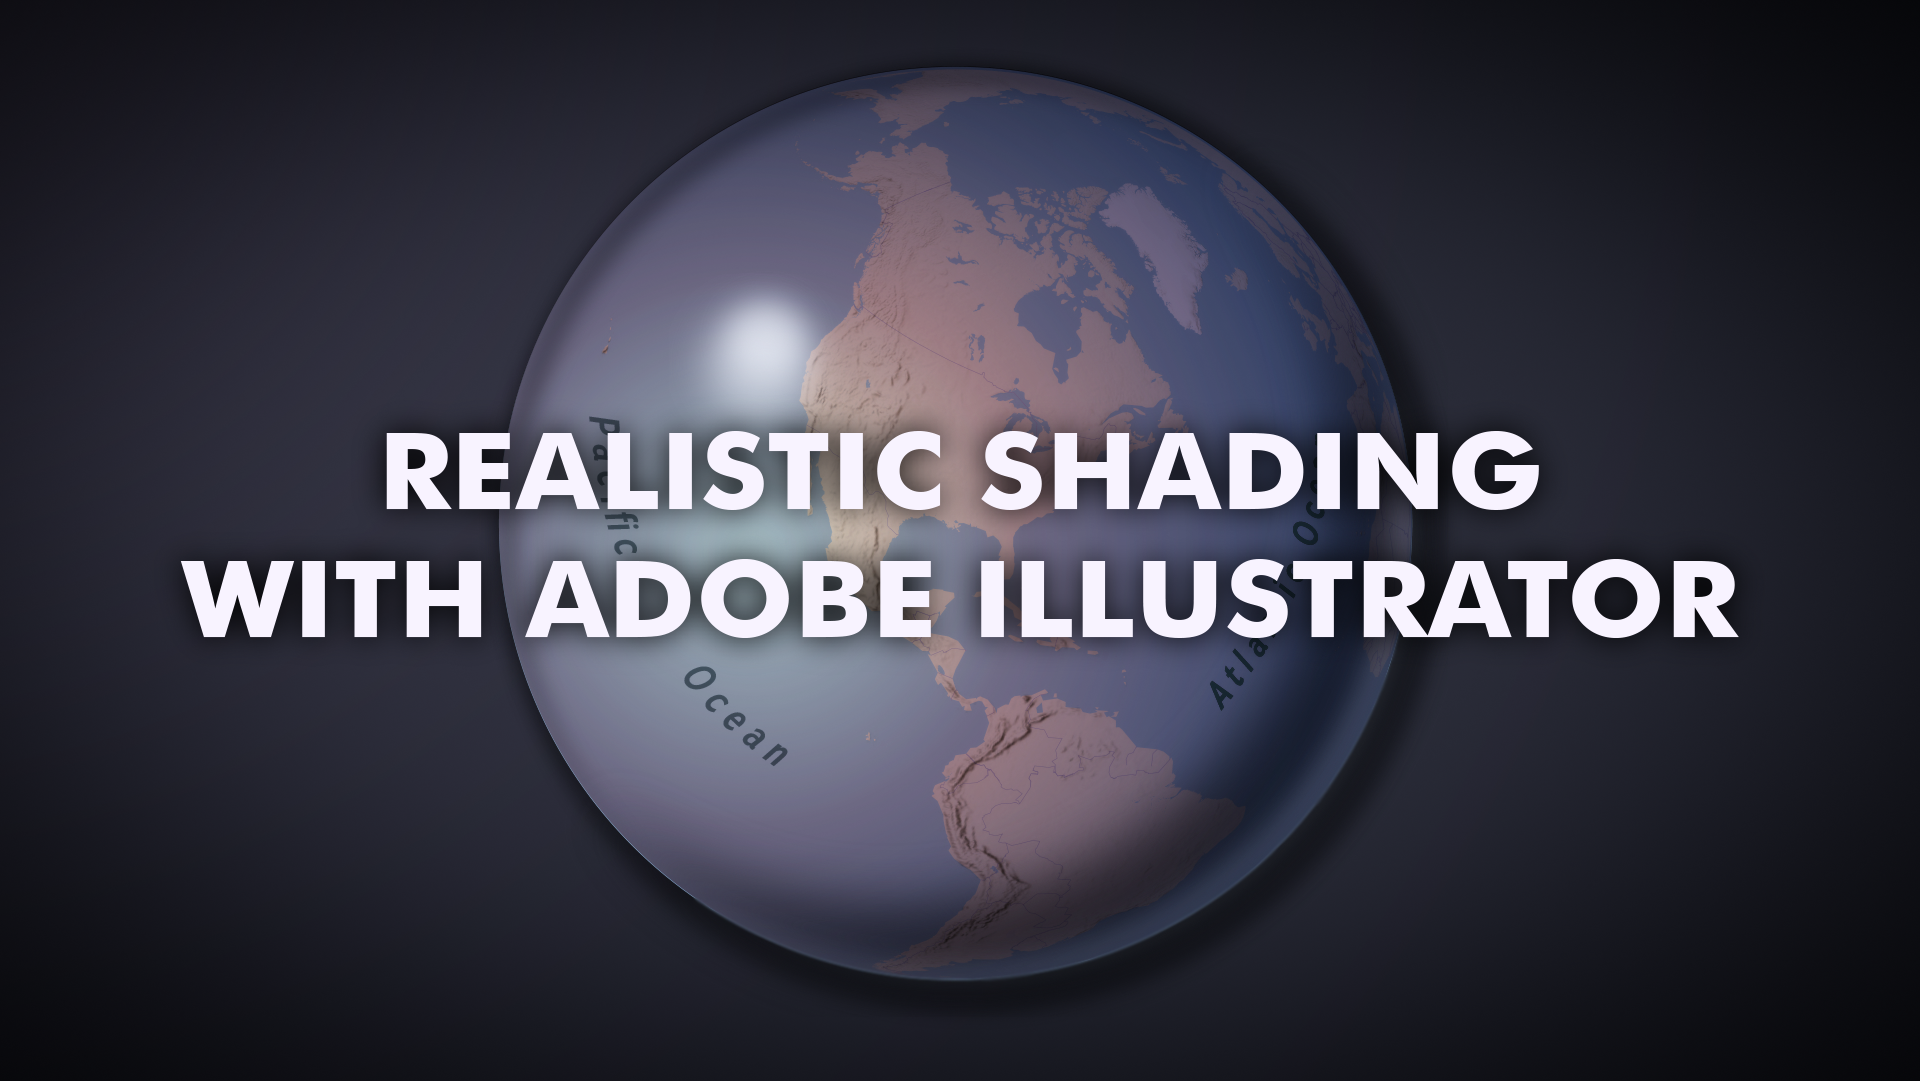 Slide of Globe rendered as 3D-esque